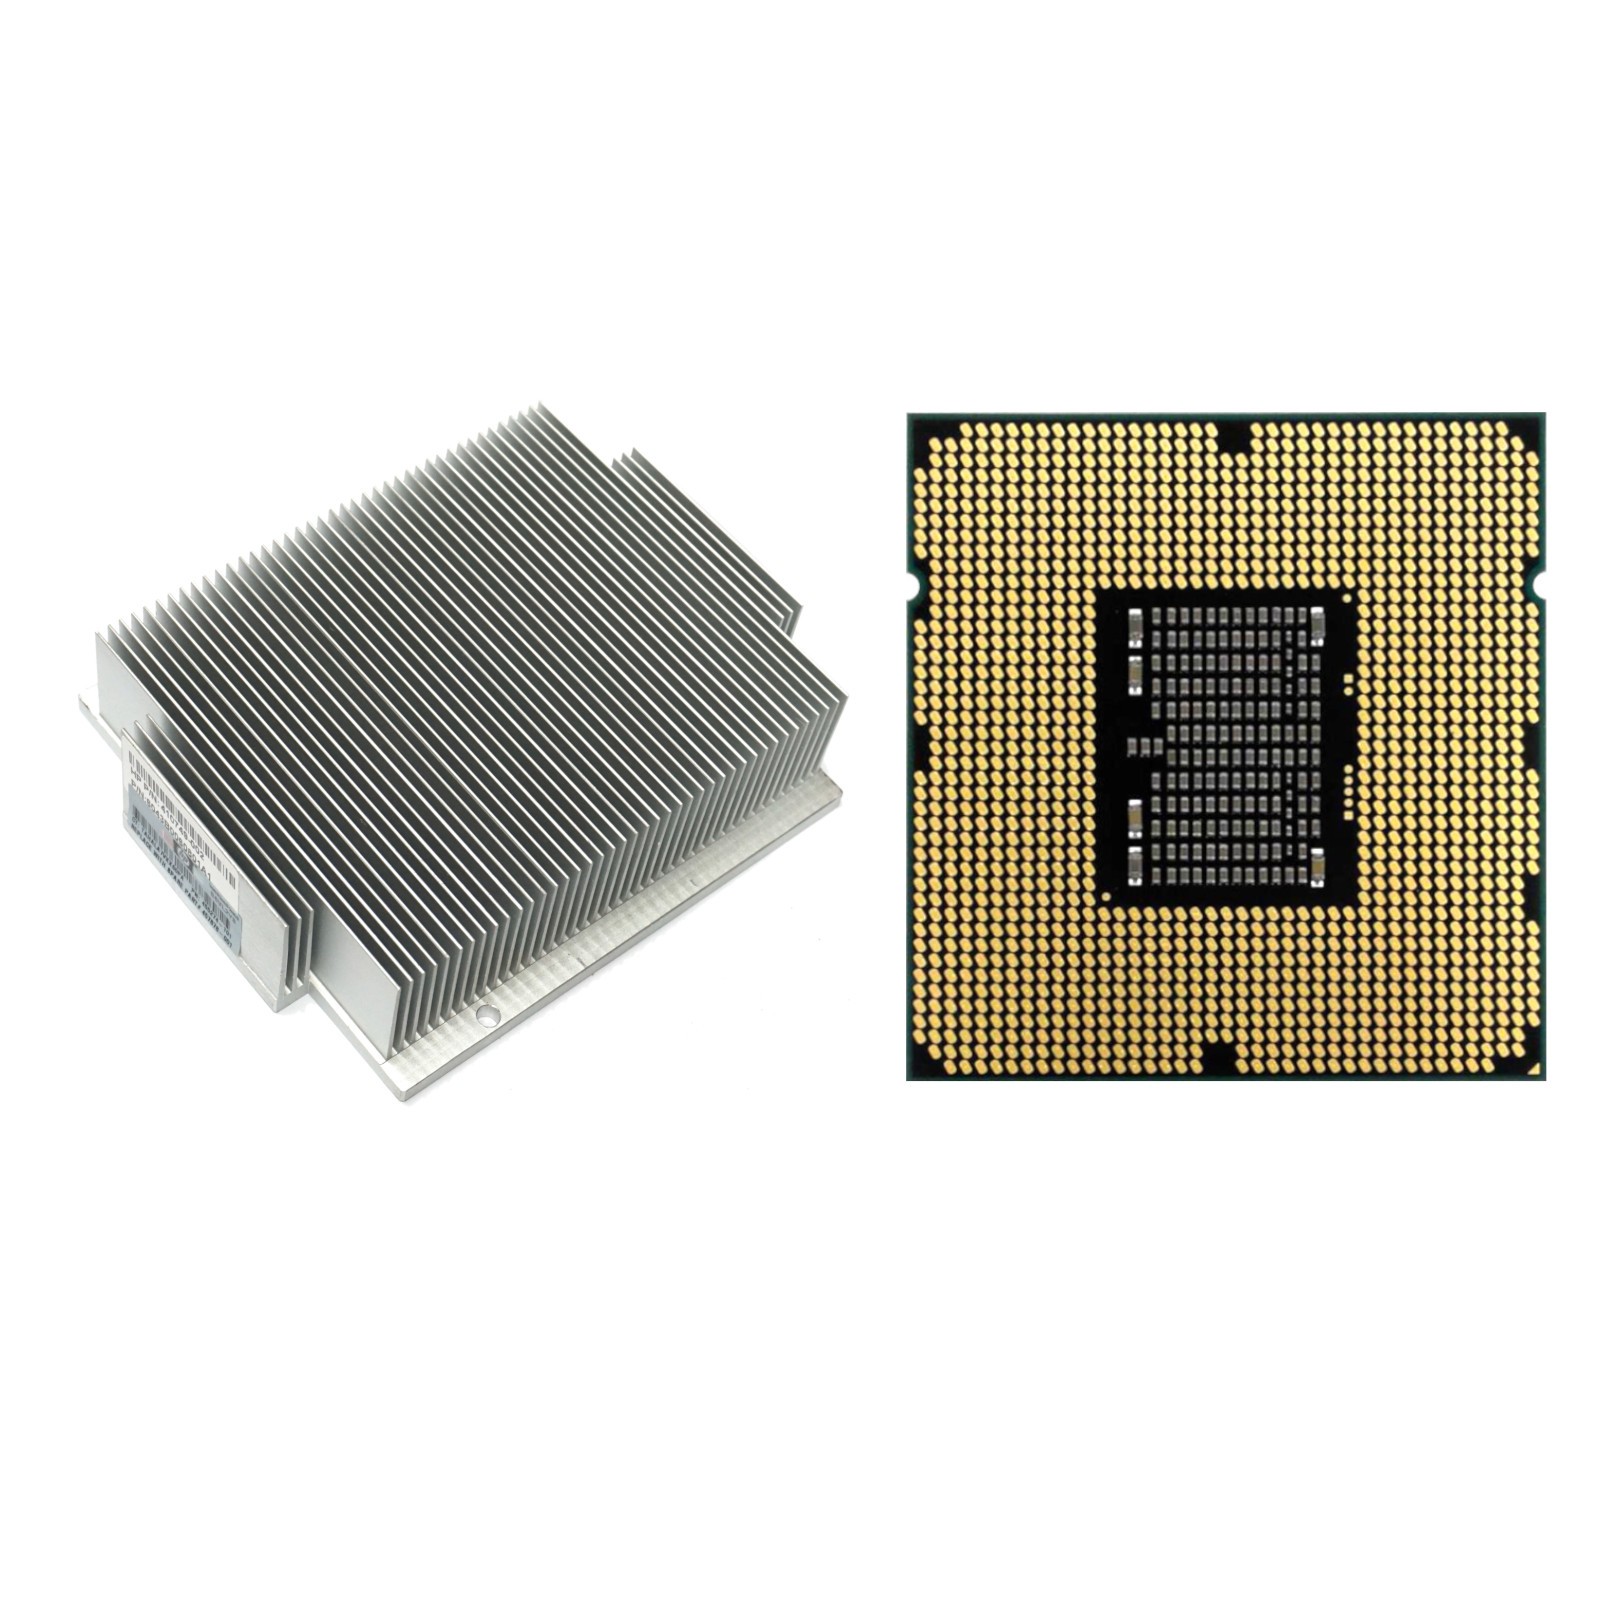 HP (416571-B21) ProLiant DL360 G5 - Intel Xeon 5130 CPU2 Kit